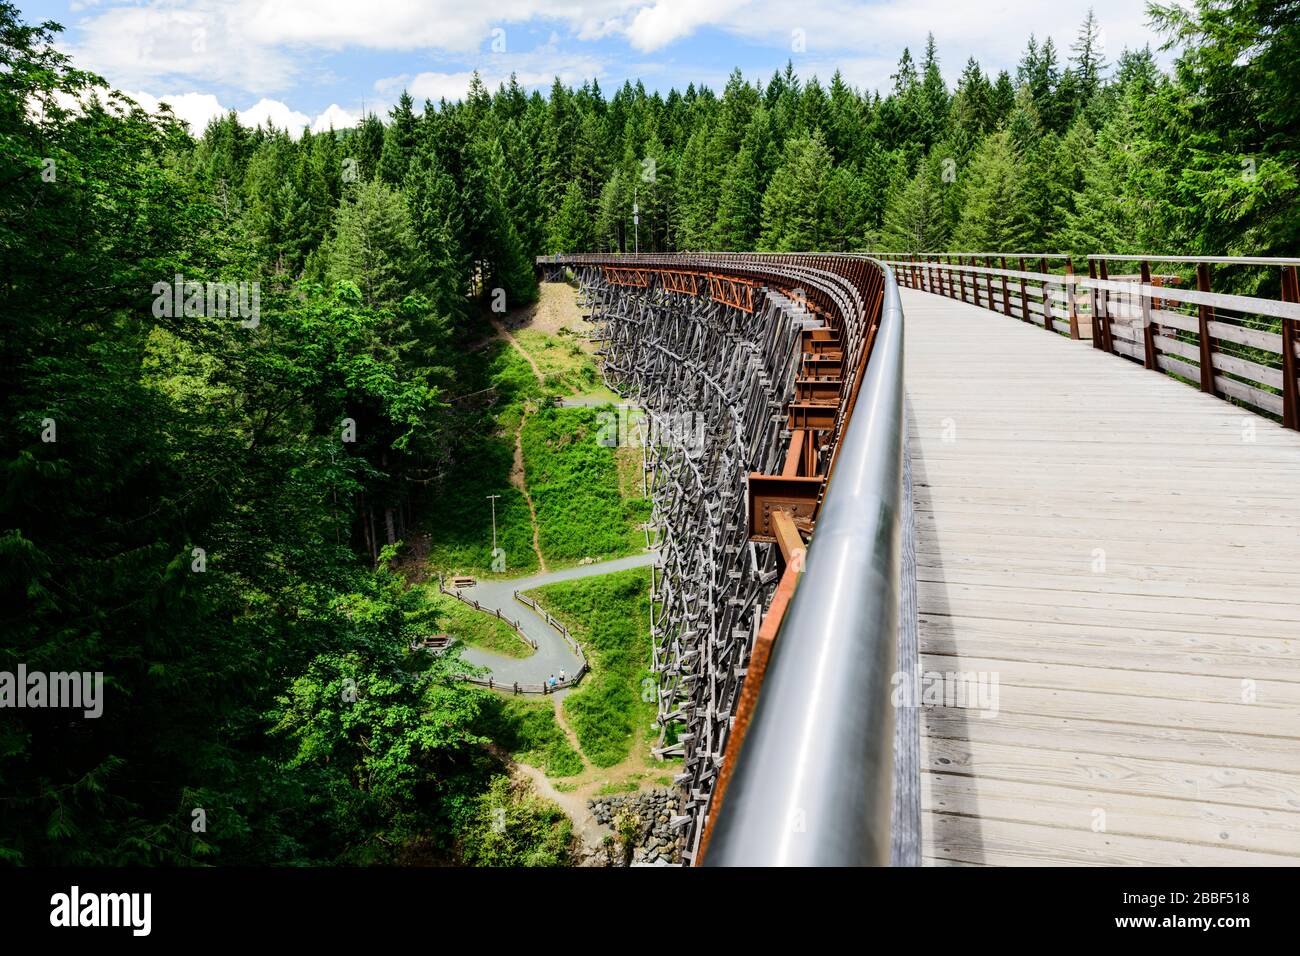 The Kinsol Trestle near Shawnigan Lake, British Columbia, Canada Stock Photo